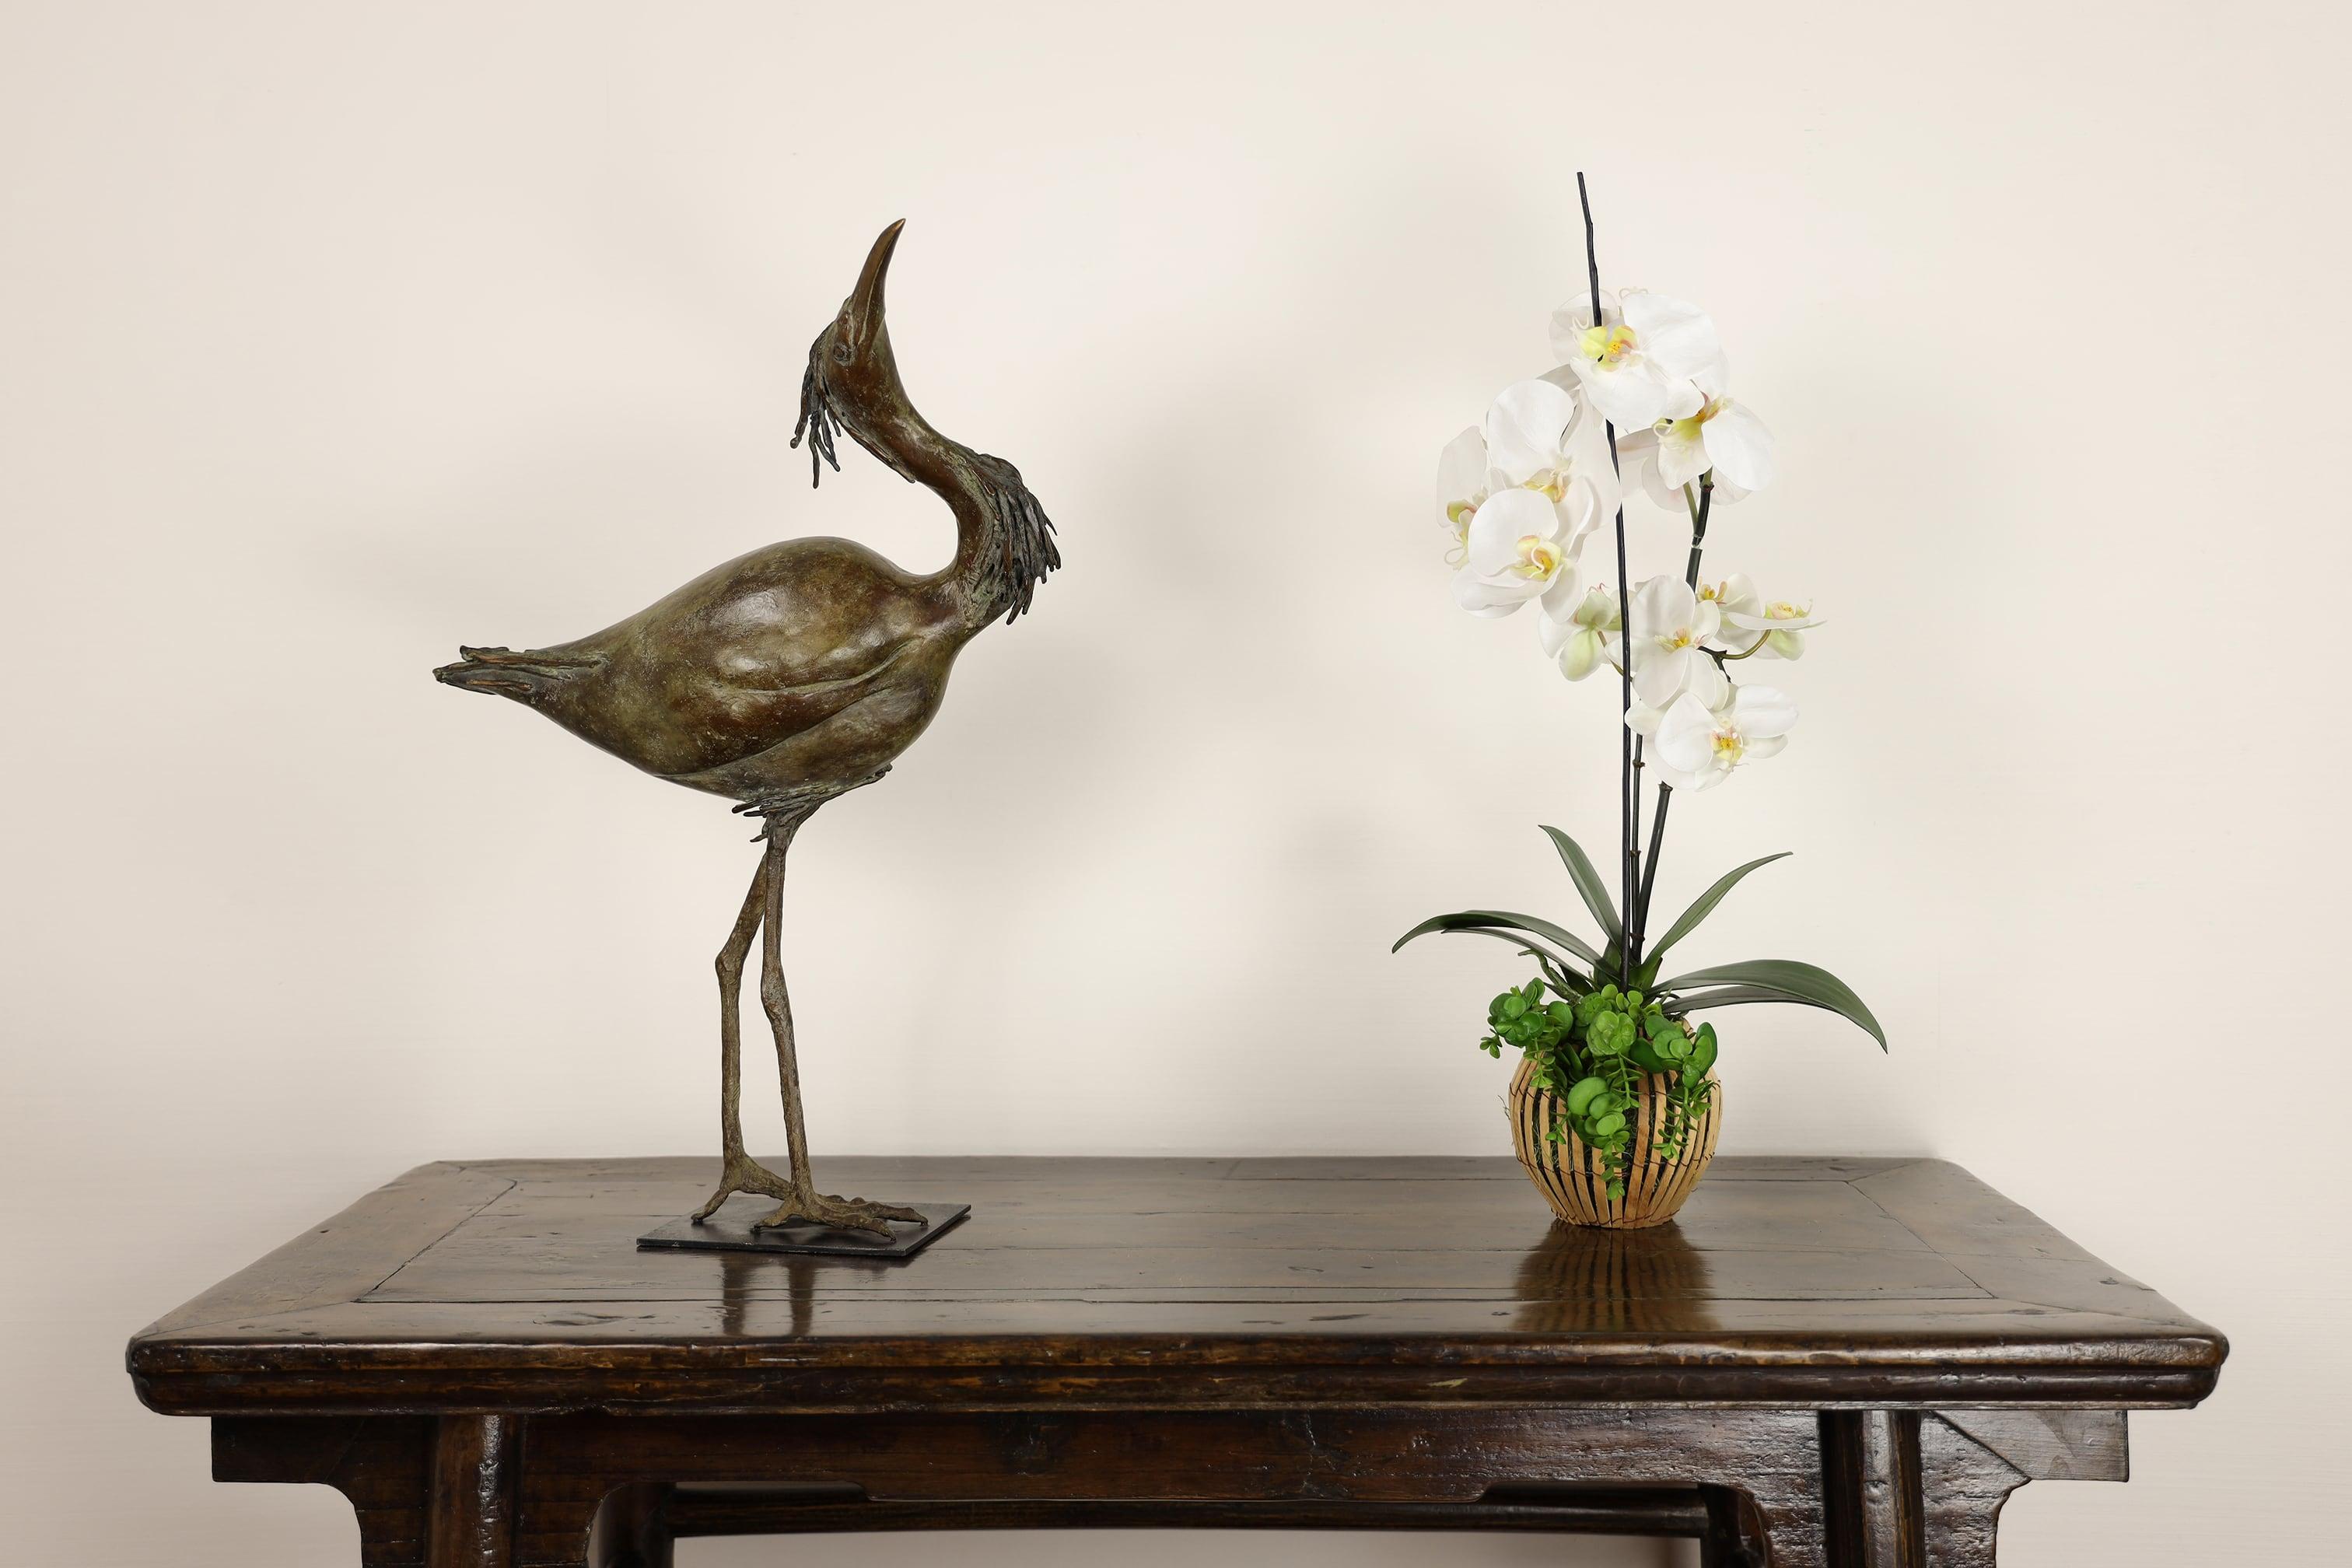 Egret by Chésade - Escultura animal en bronce de un ave, realista, expresiva en venta 1